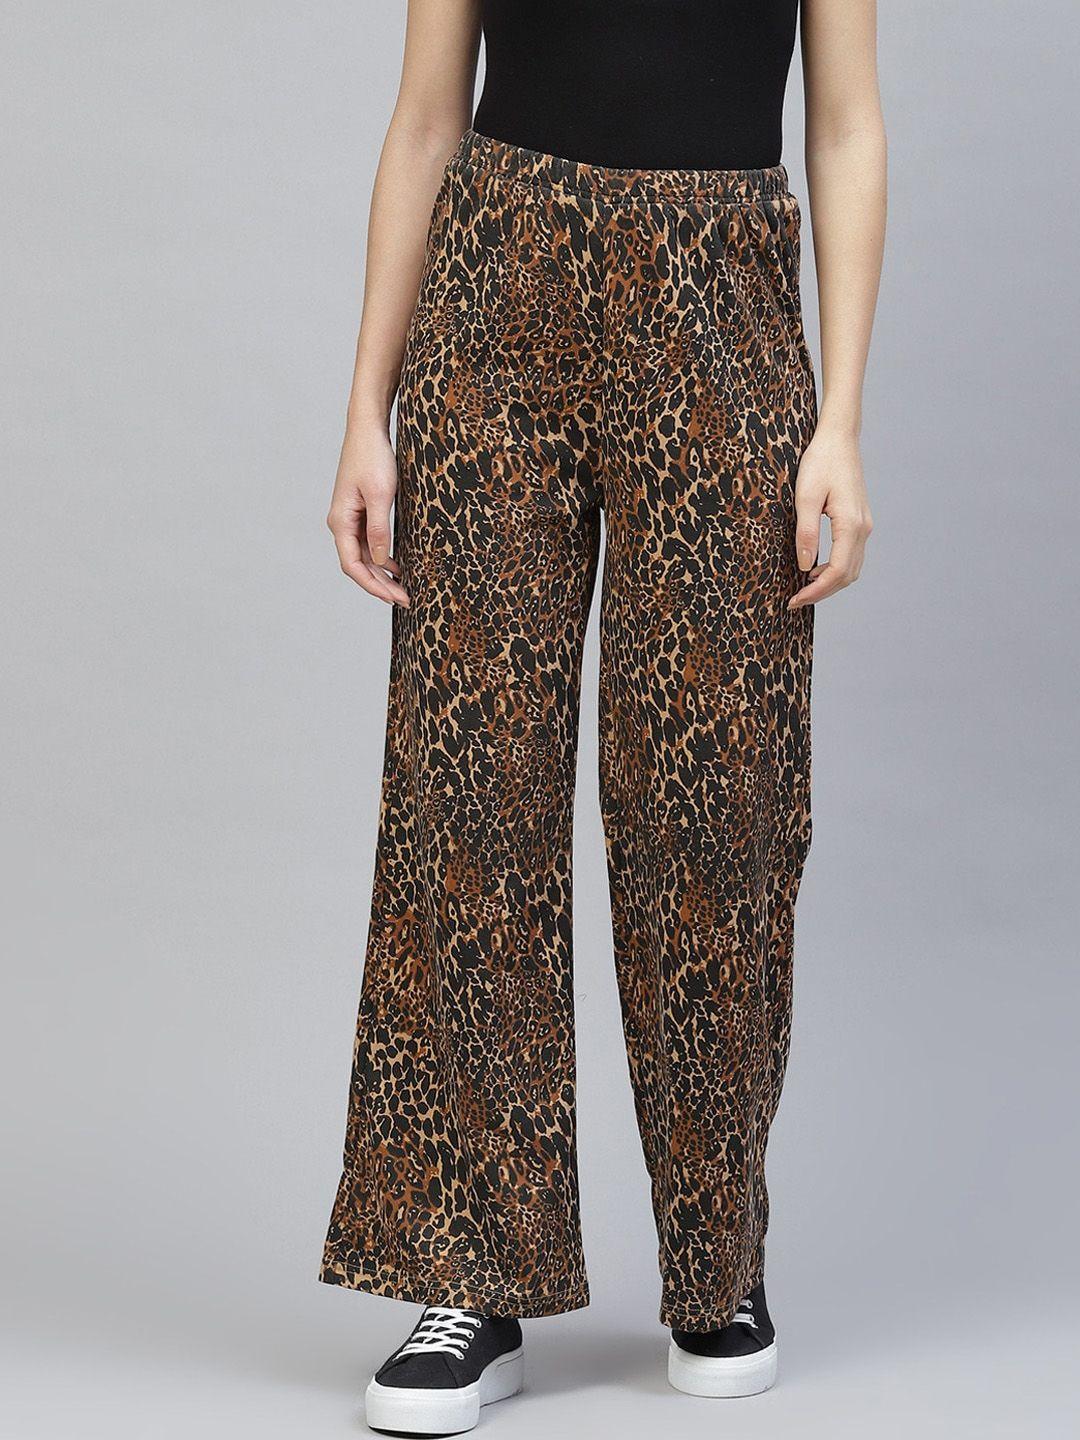 laabha-women-brown-animal-printed-track-pants